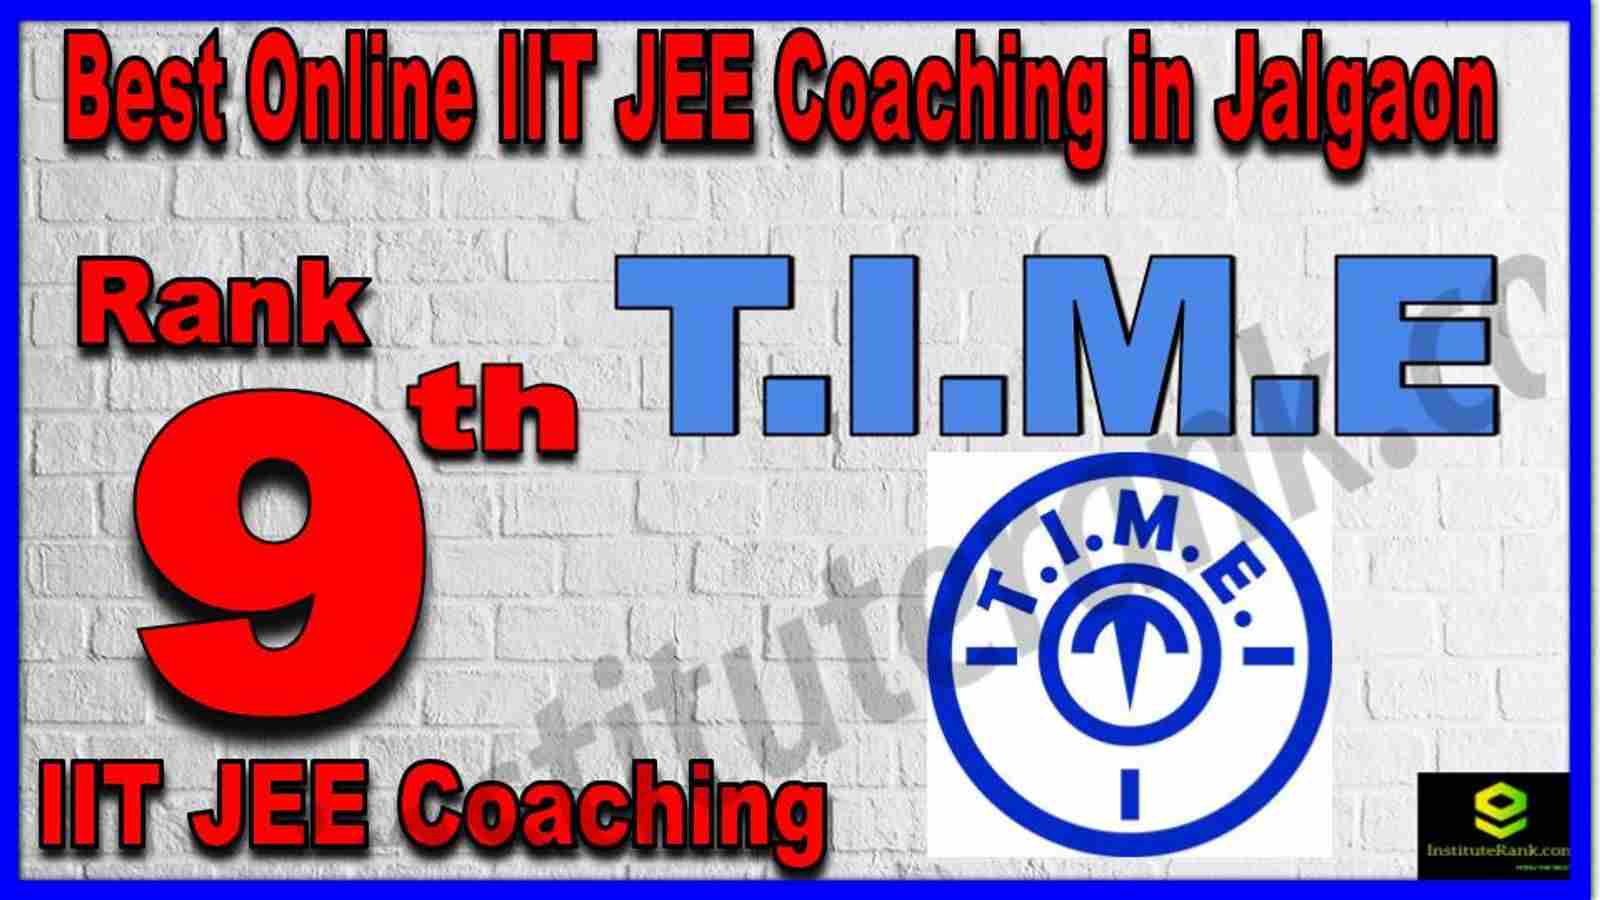 Rank 9th Best Online IIT JEE Coaching in Jalgaon